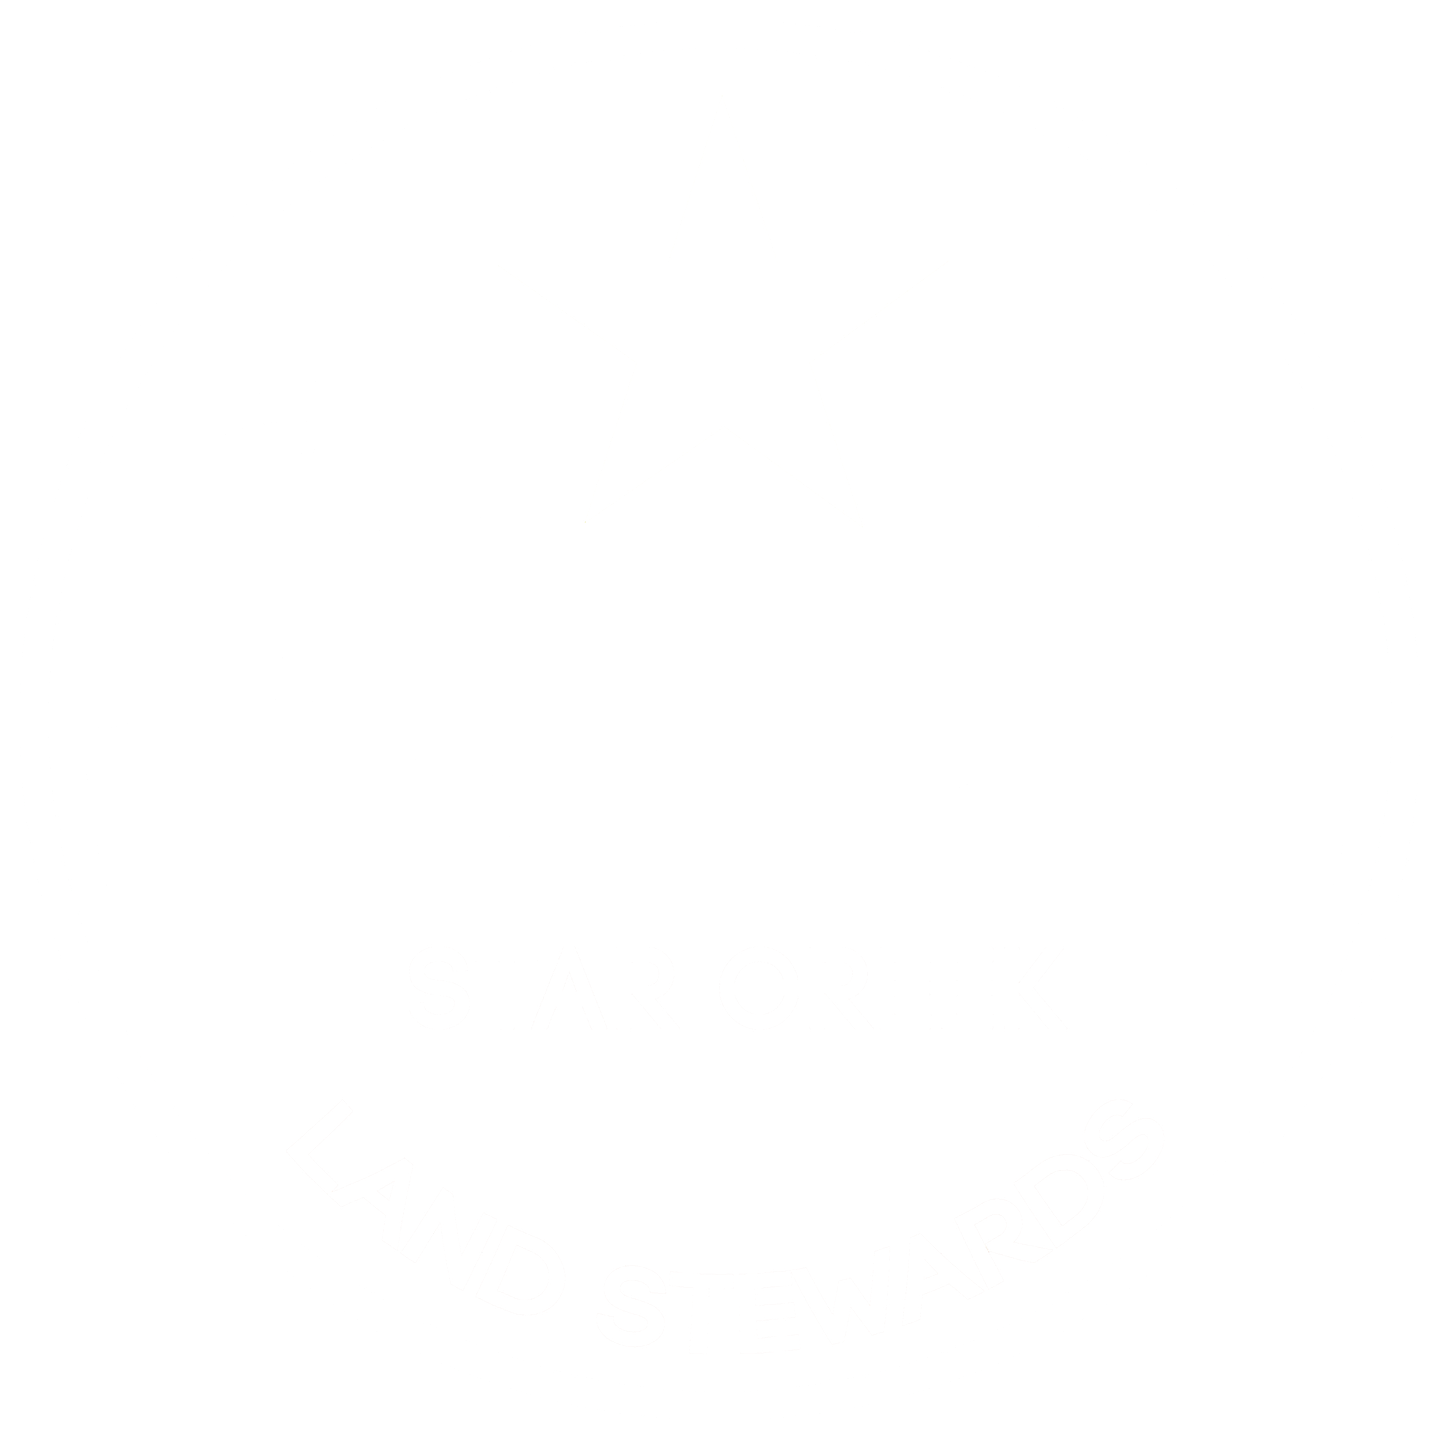 Star Creek Land Stewards, Inc. 